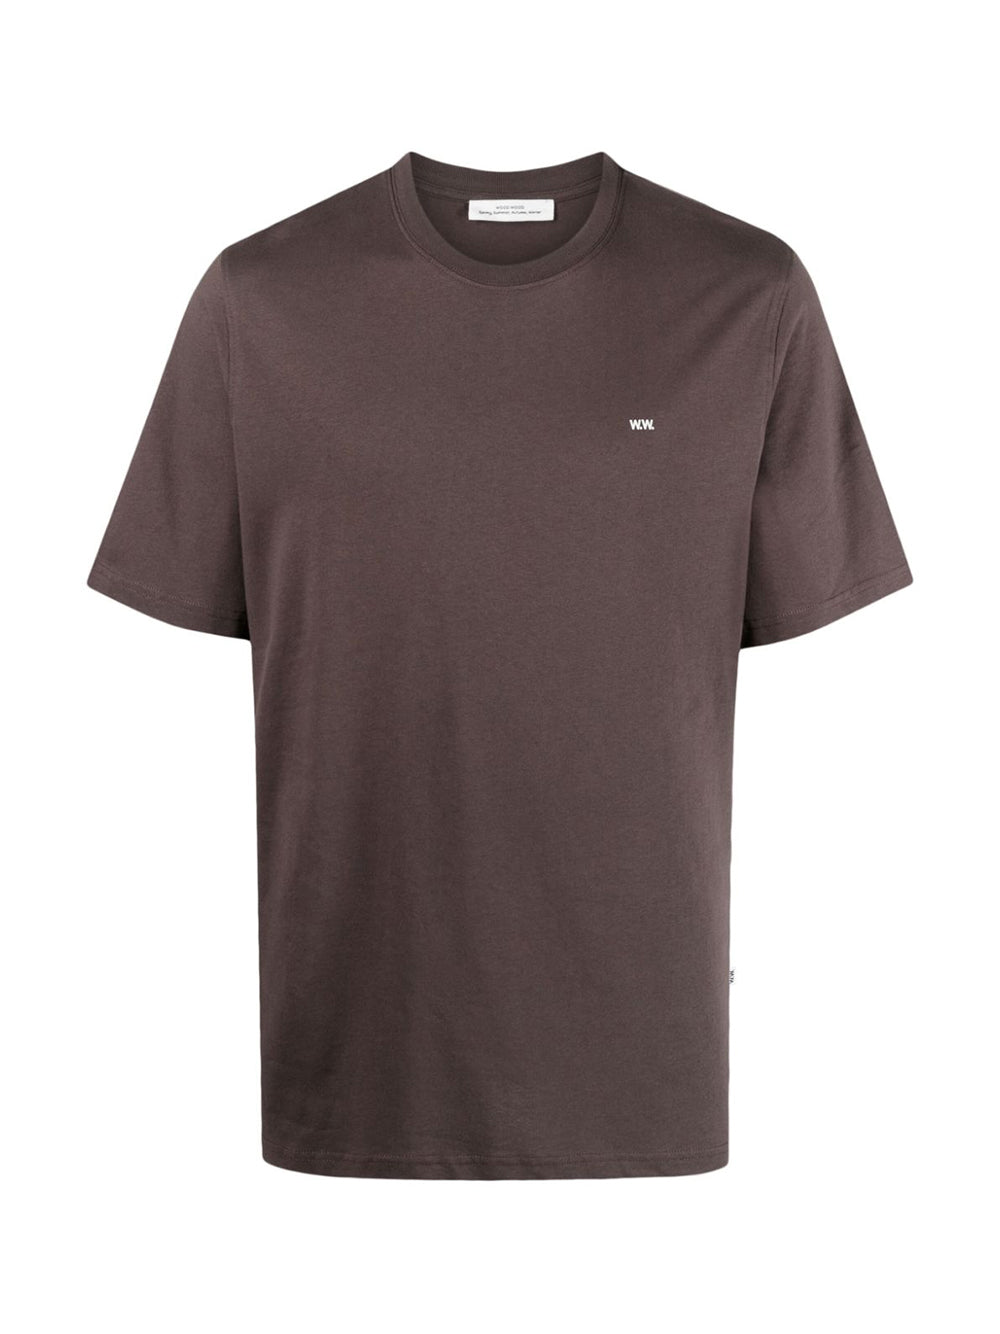 Essential Sami Brown T-shirt